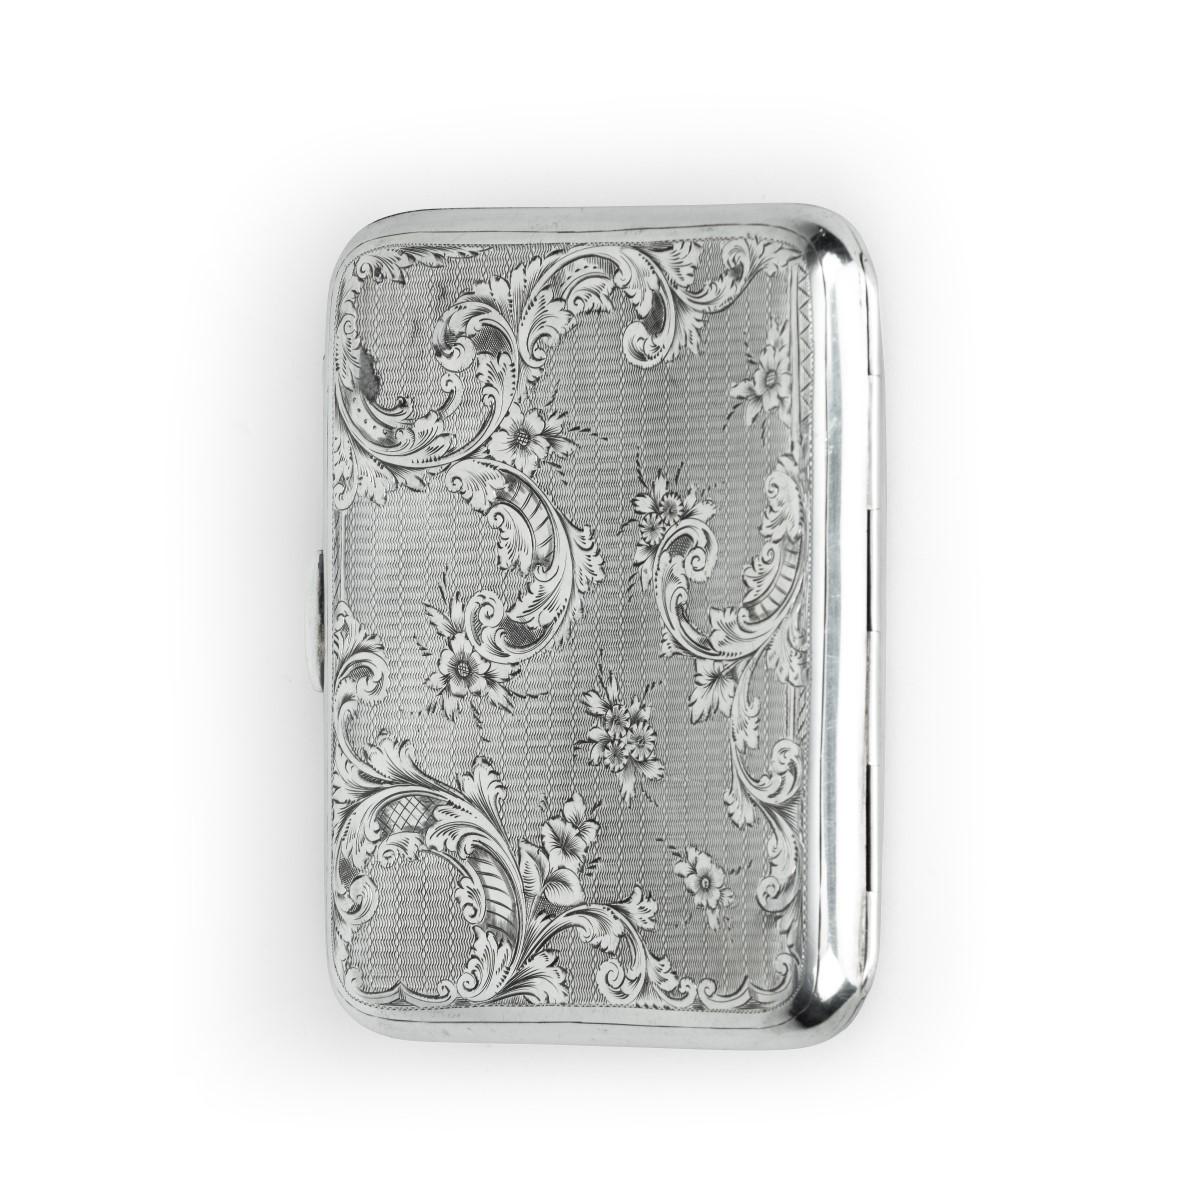 Edwardian silver and enamel cheroot case